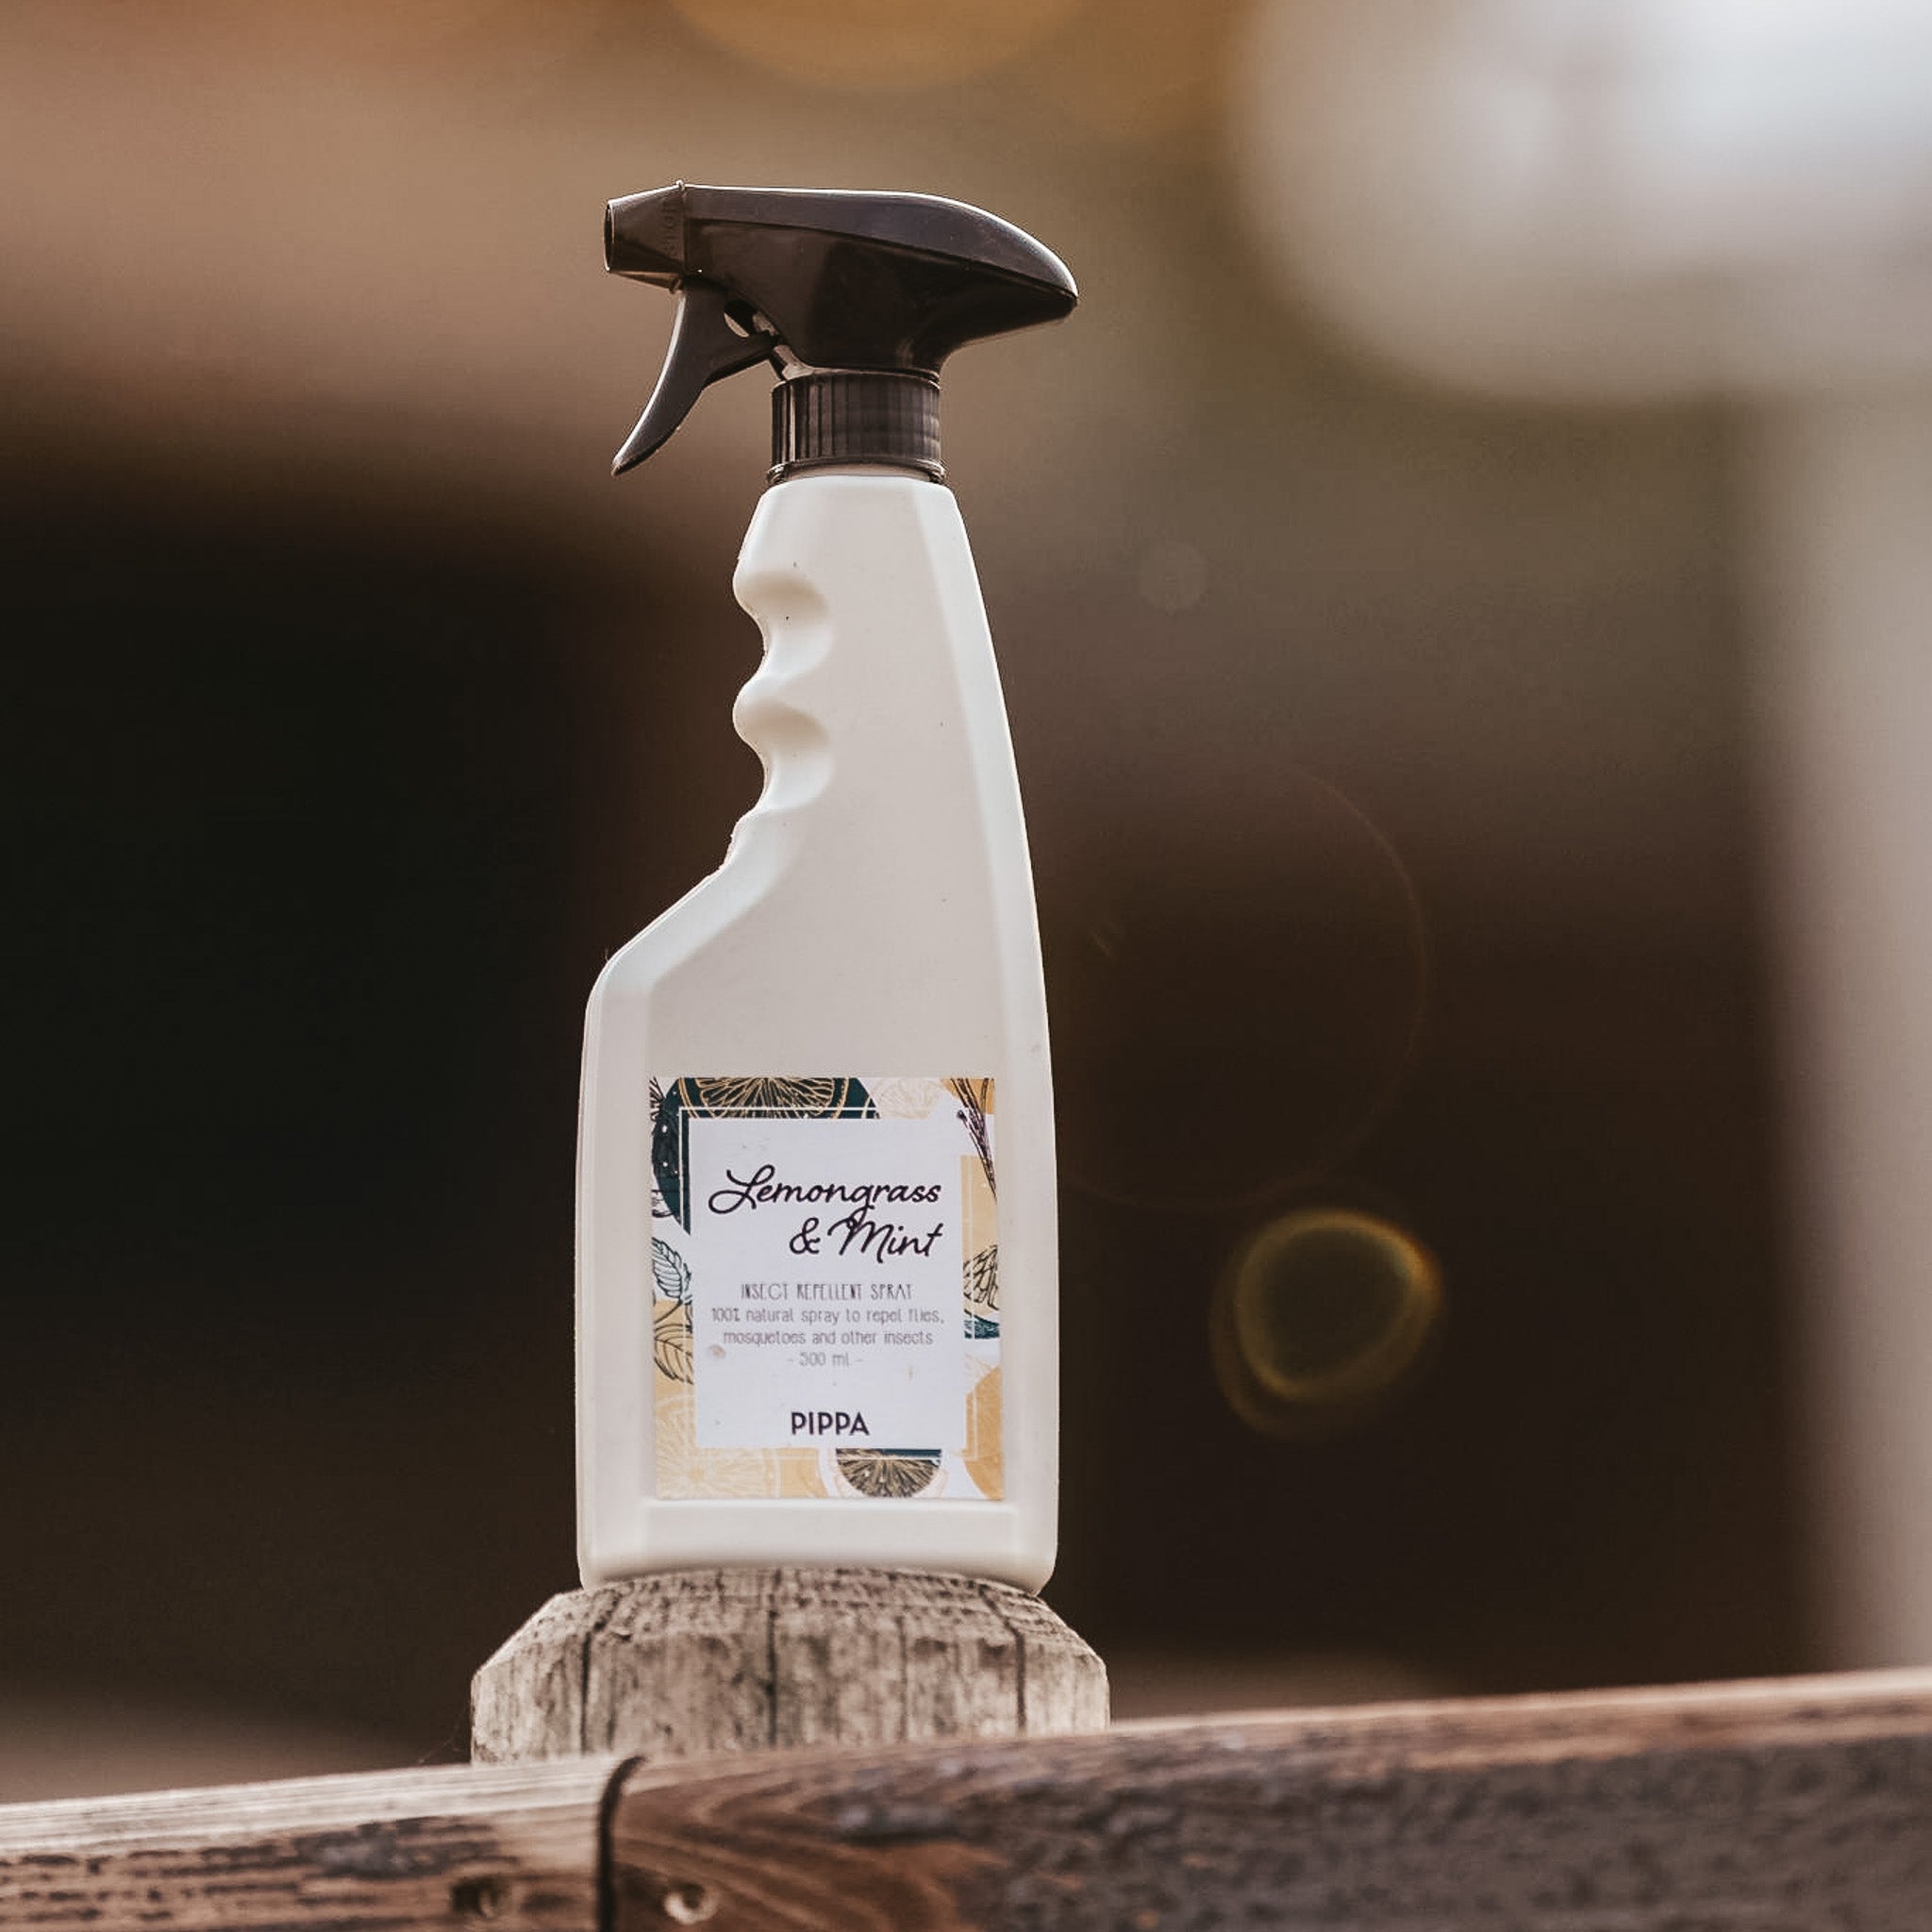 PIPPA Lemongrass & Mint Repellent Spray - PIPPA Equestrian Soap - Vliegenspray